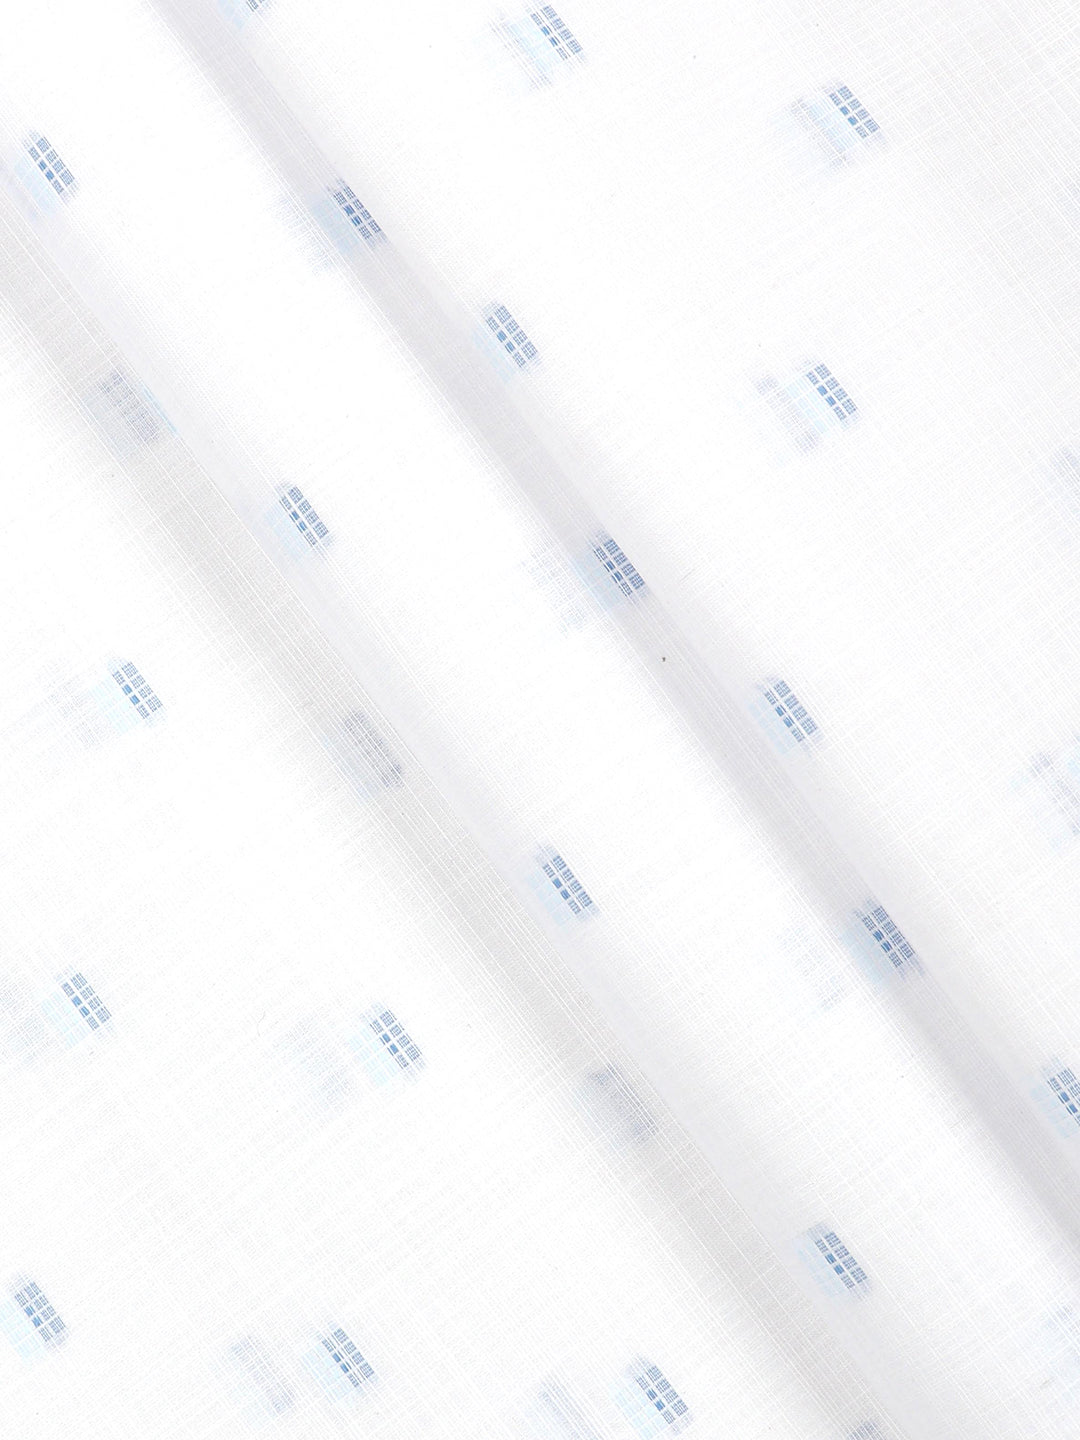 Cotton Colour Printed White & Blue Shirting Fabric Galaxy Art-Pattern view